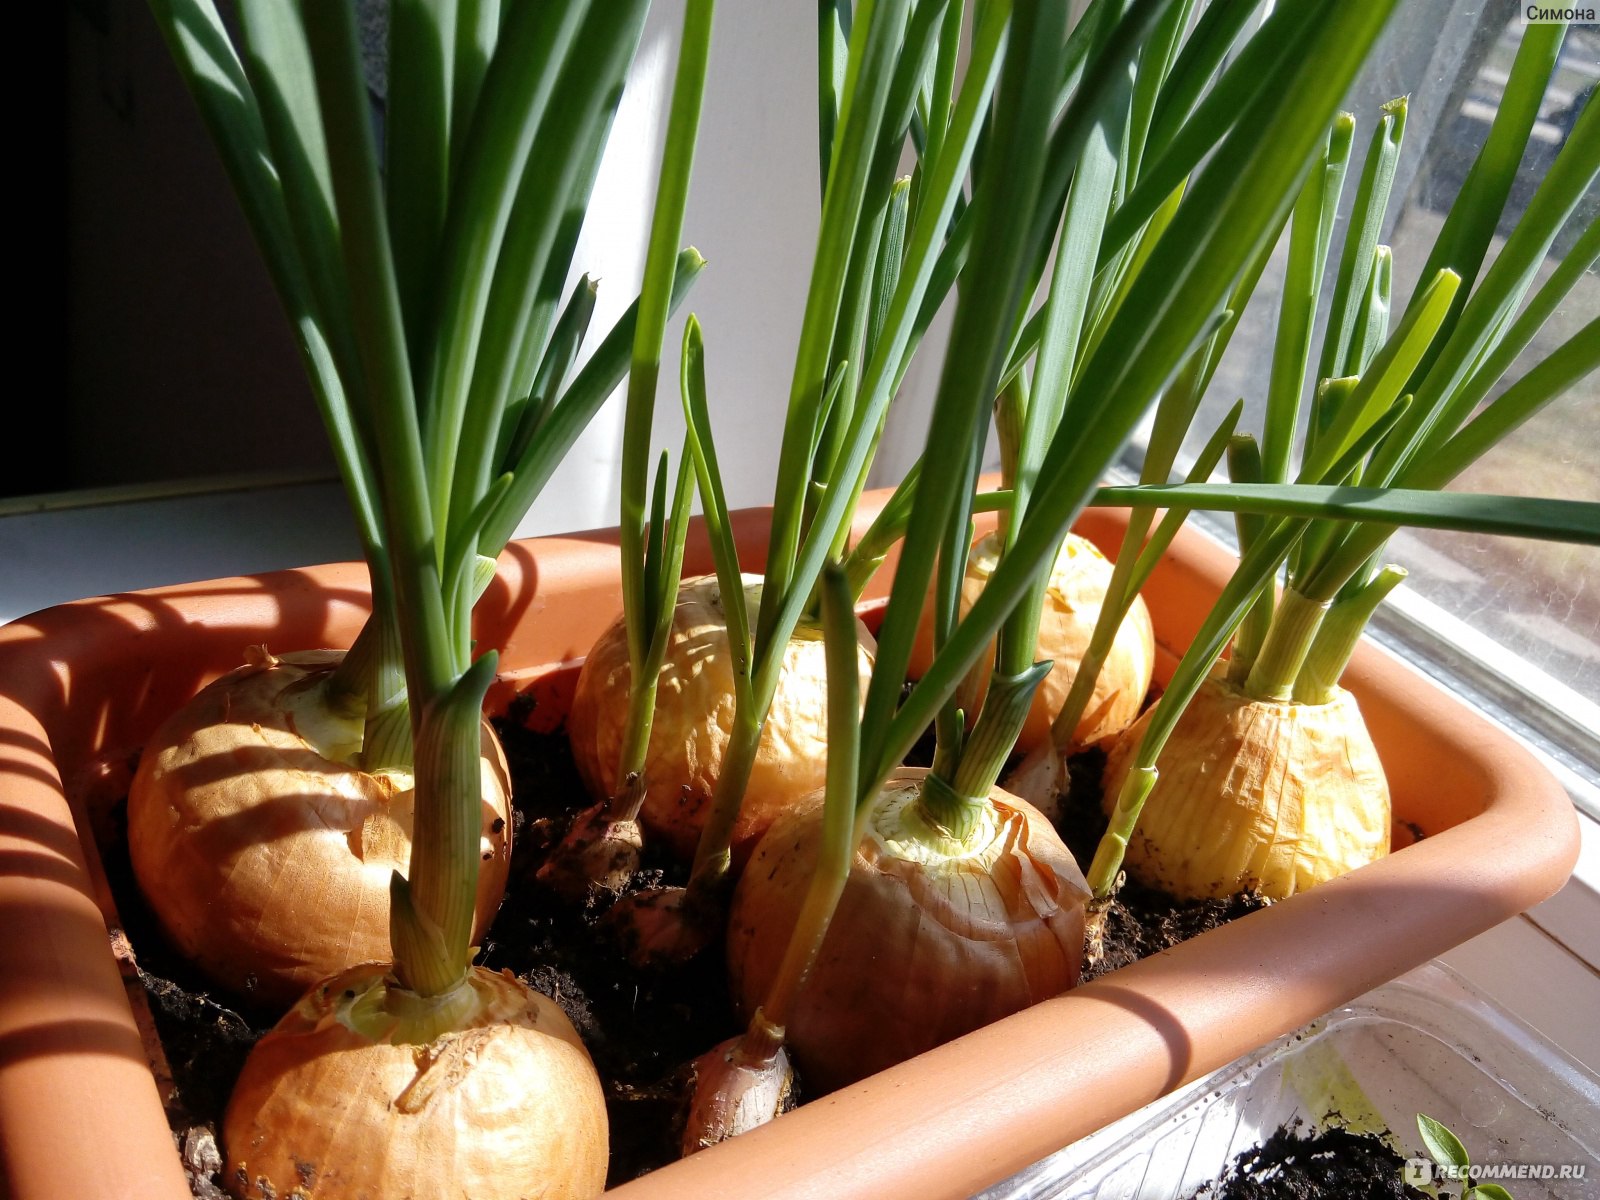 Как посадить лук севок дома на подоконнике